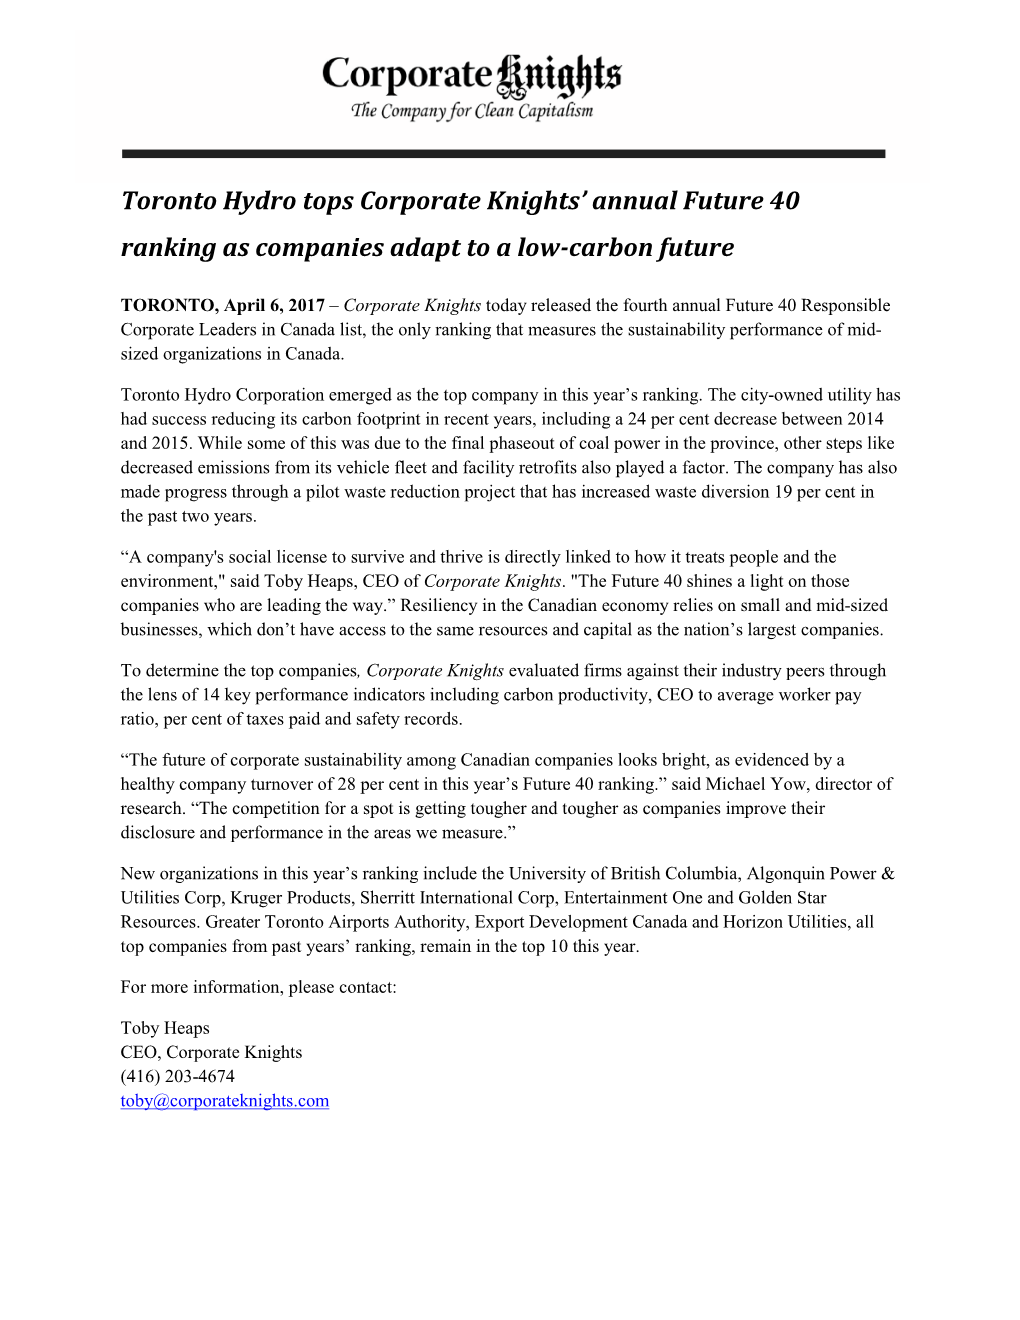 Toronto Hydro Tops Corporate Knights' Annual Future 40 Ranking